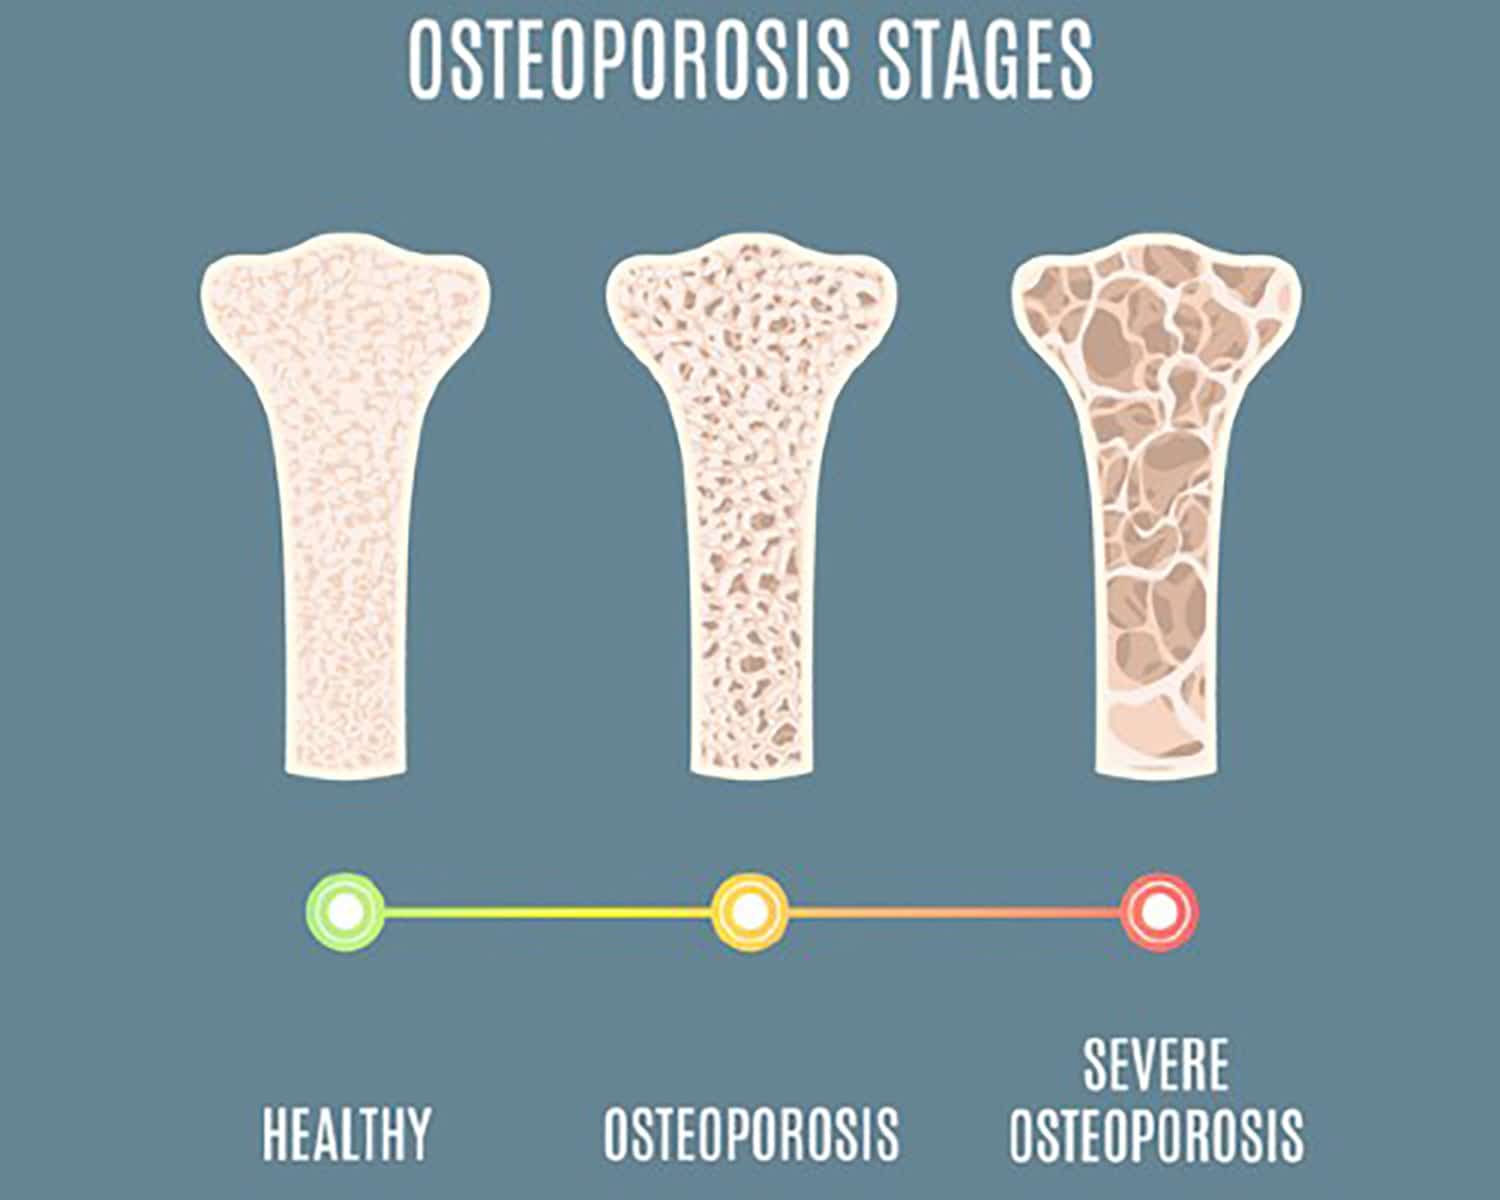 Image showing osteoporosis